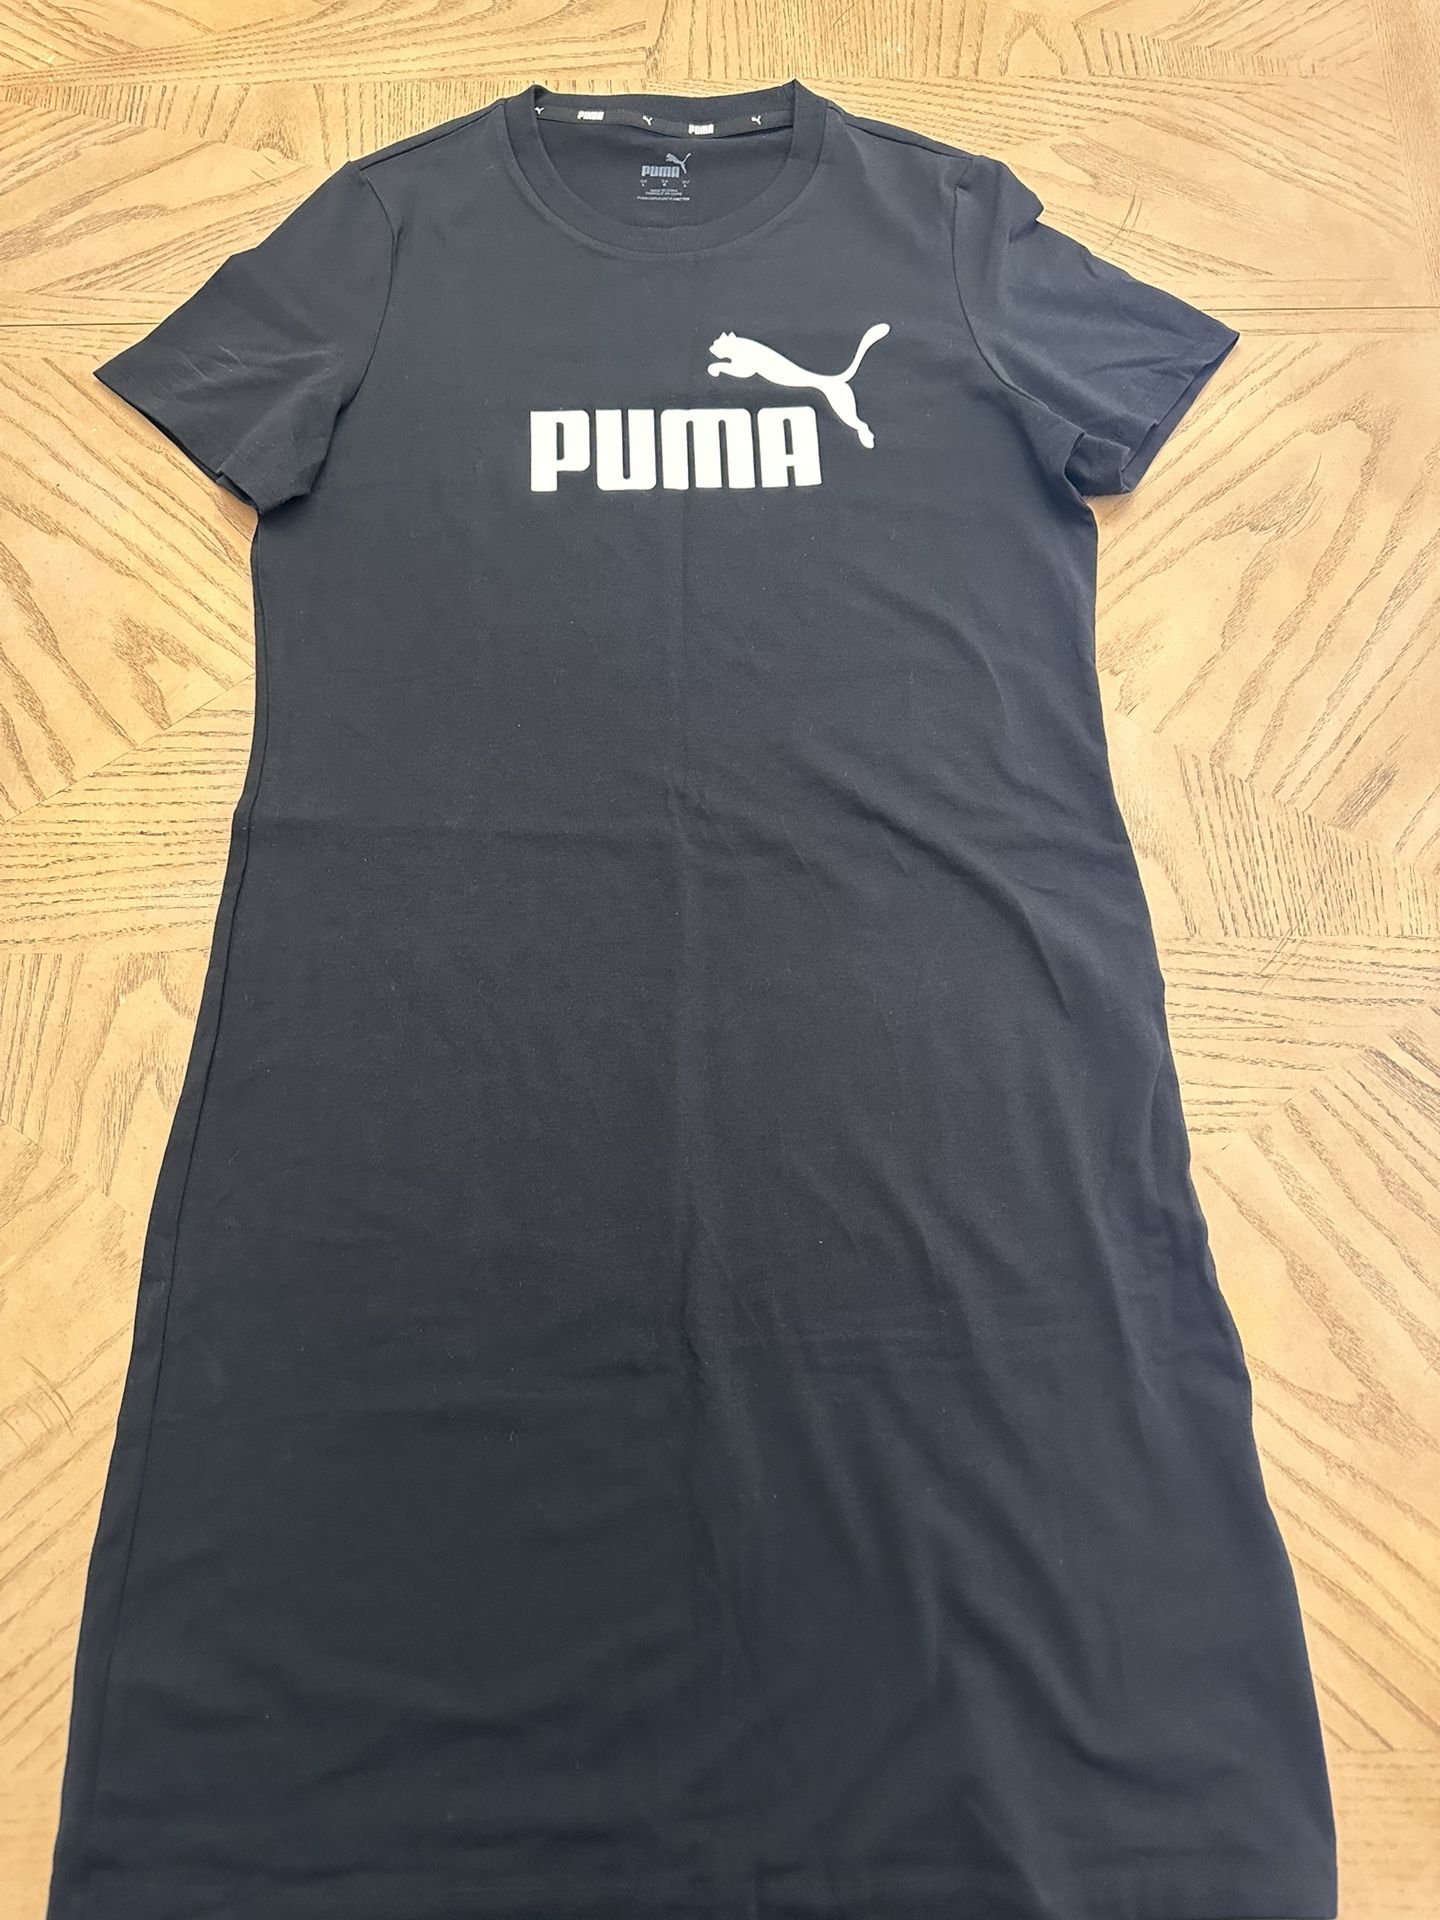 Puma Women's Slim Fit T-Shirt Dress Black  Size Large 